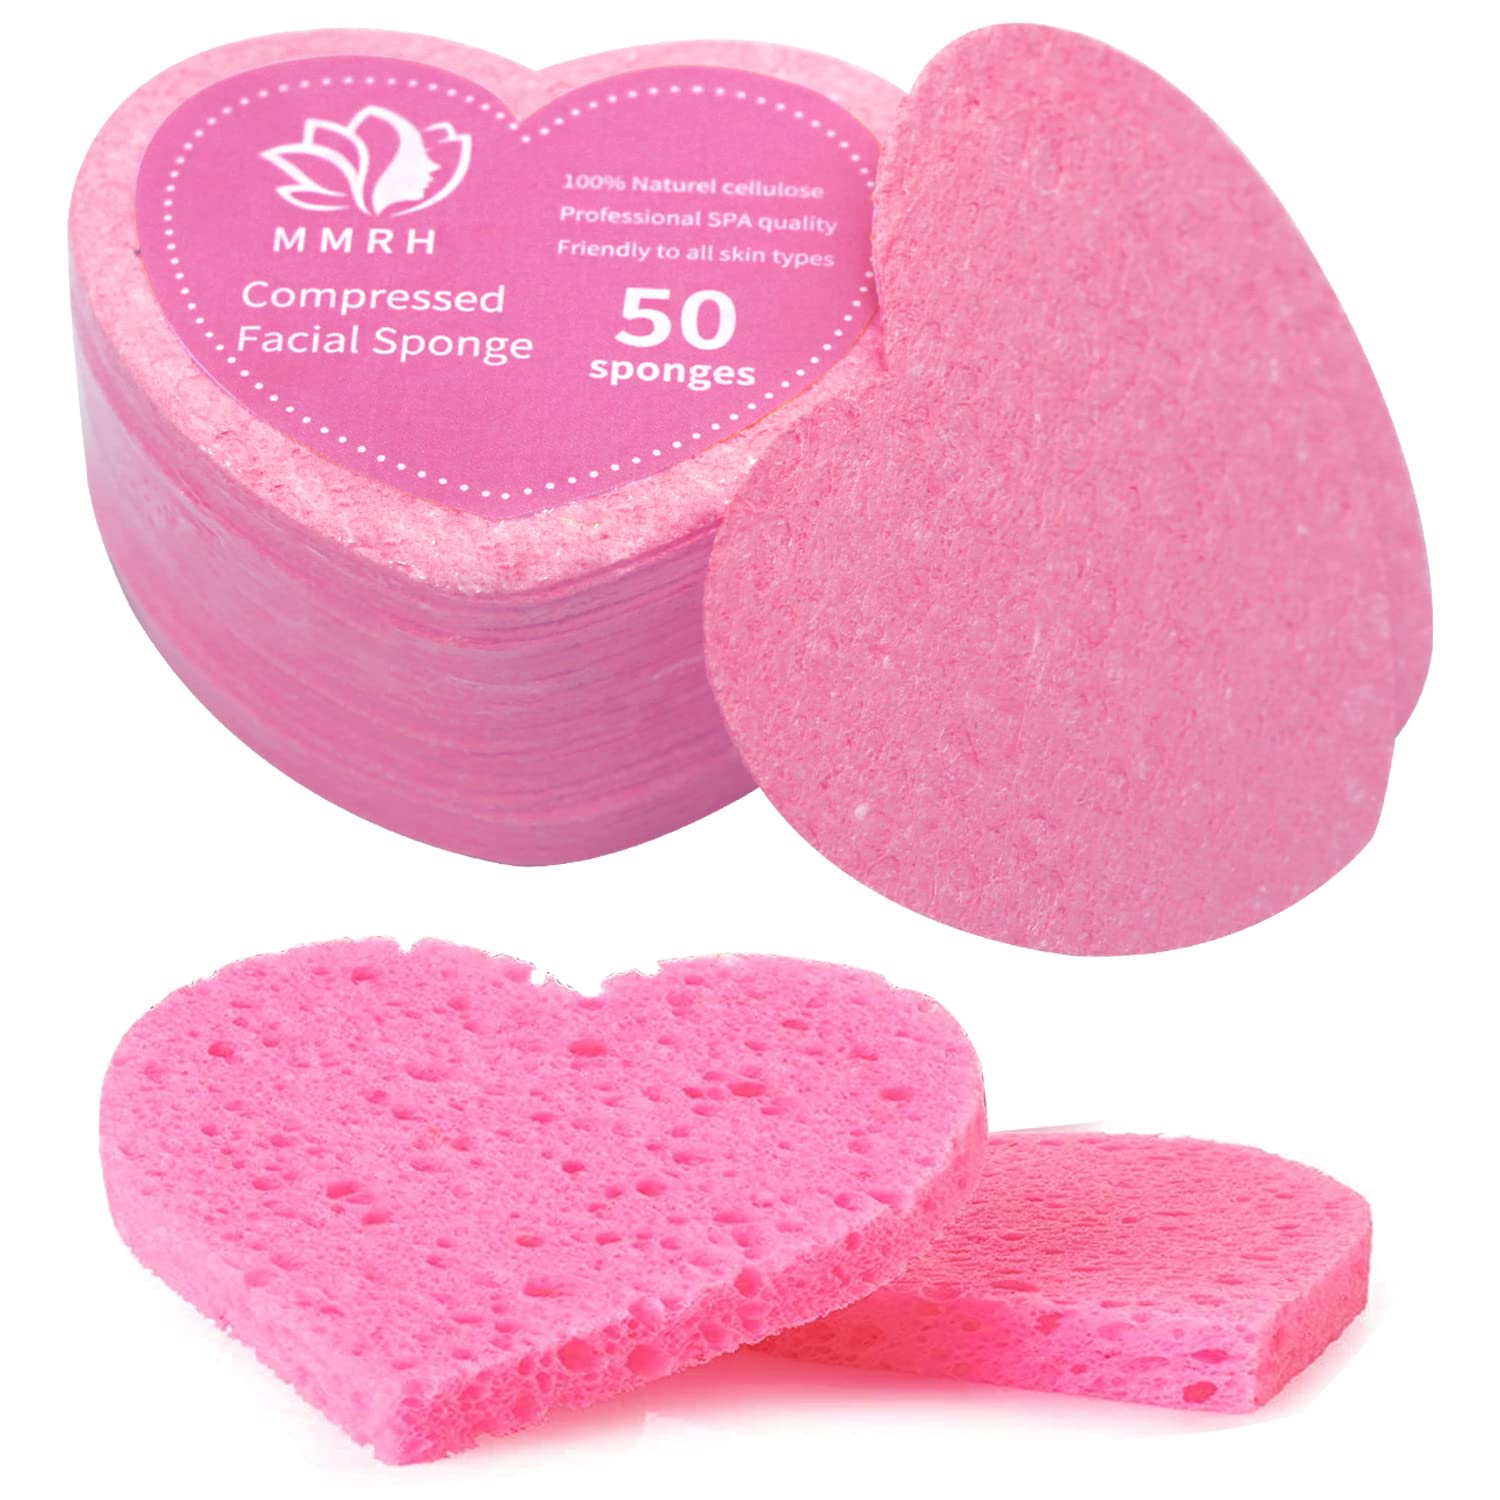 MMRH Facial Sponges Heart Shape Compressed Facial Sponges Natural Facial  Cleansing Sponges Pads Exfoliating Sponges for Cleansing Reusable 50 Pieces  (Pink)